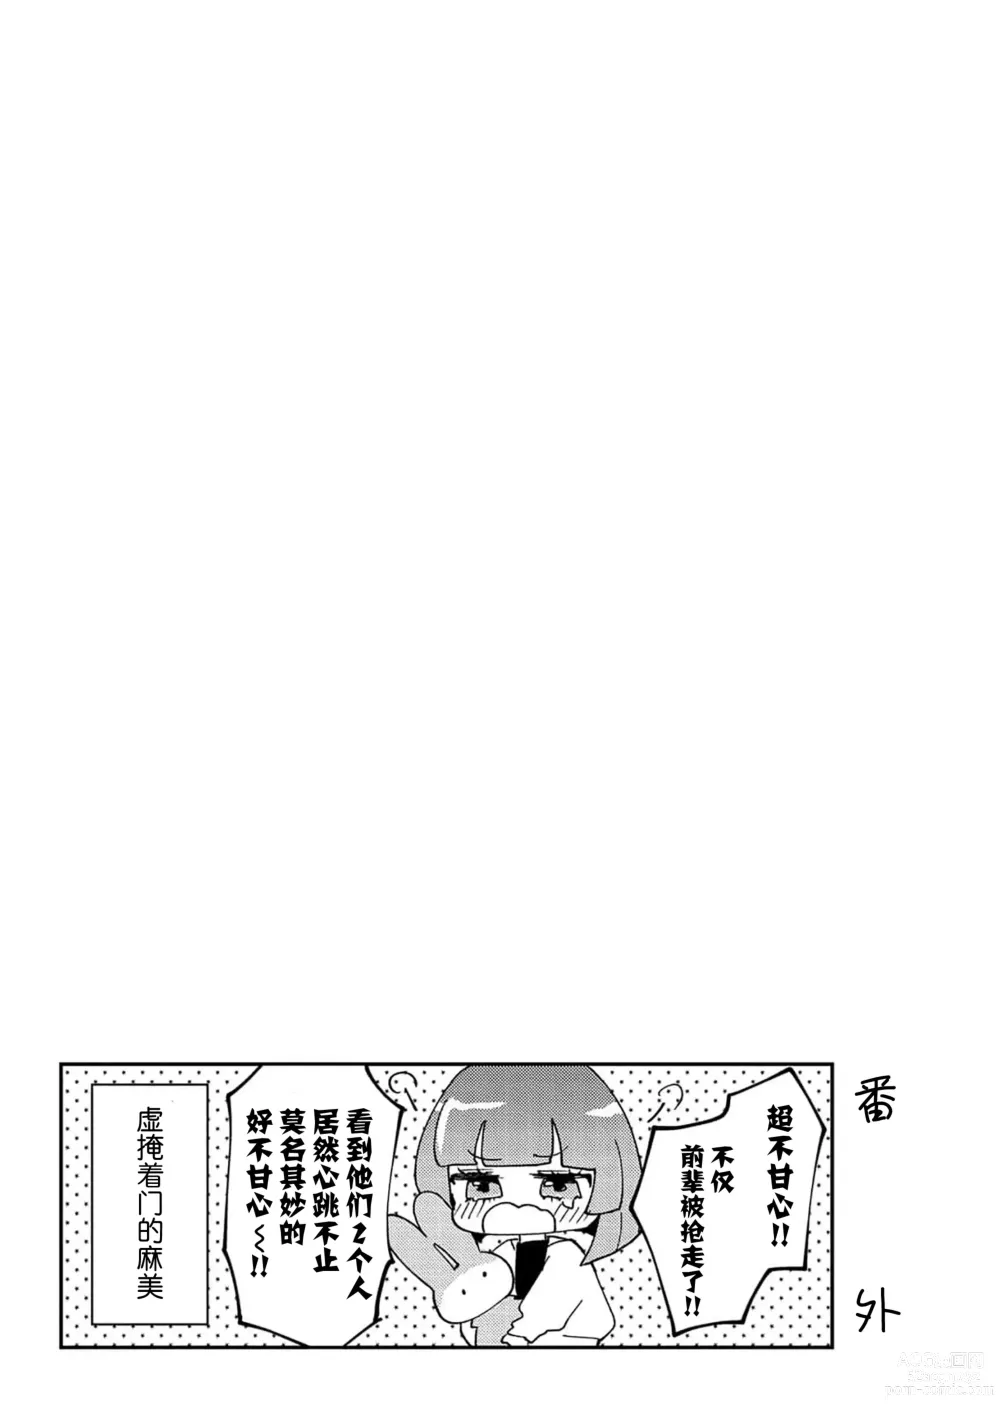 Page 155 of manga 虽说不善恋爱